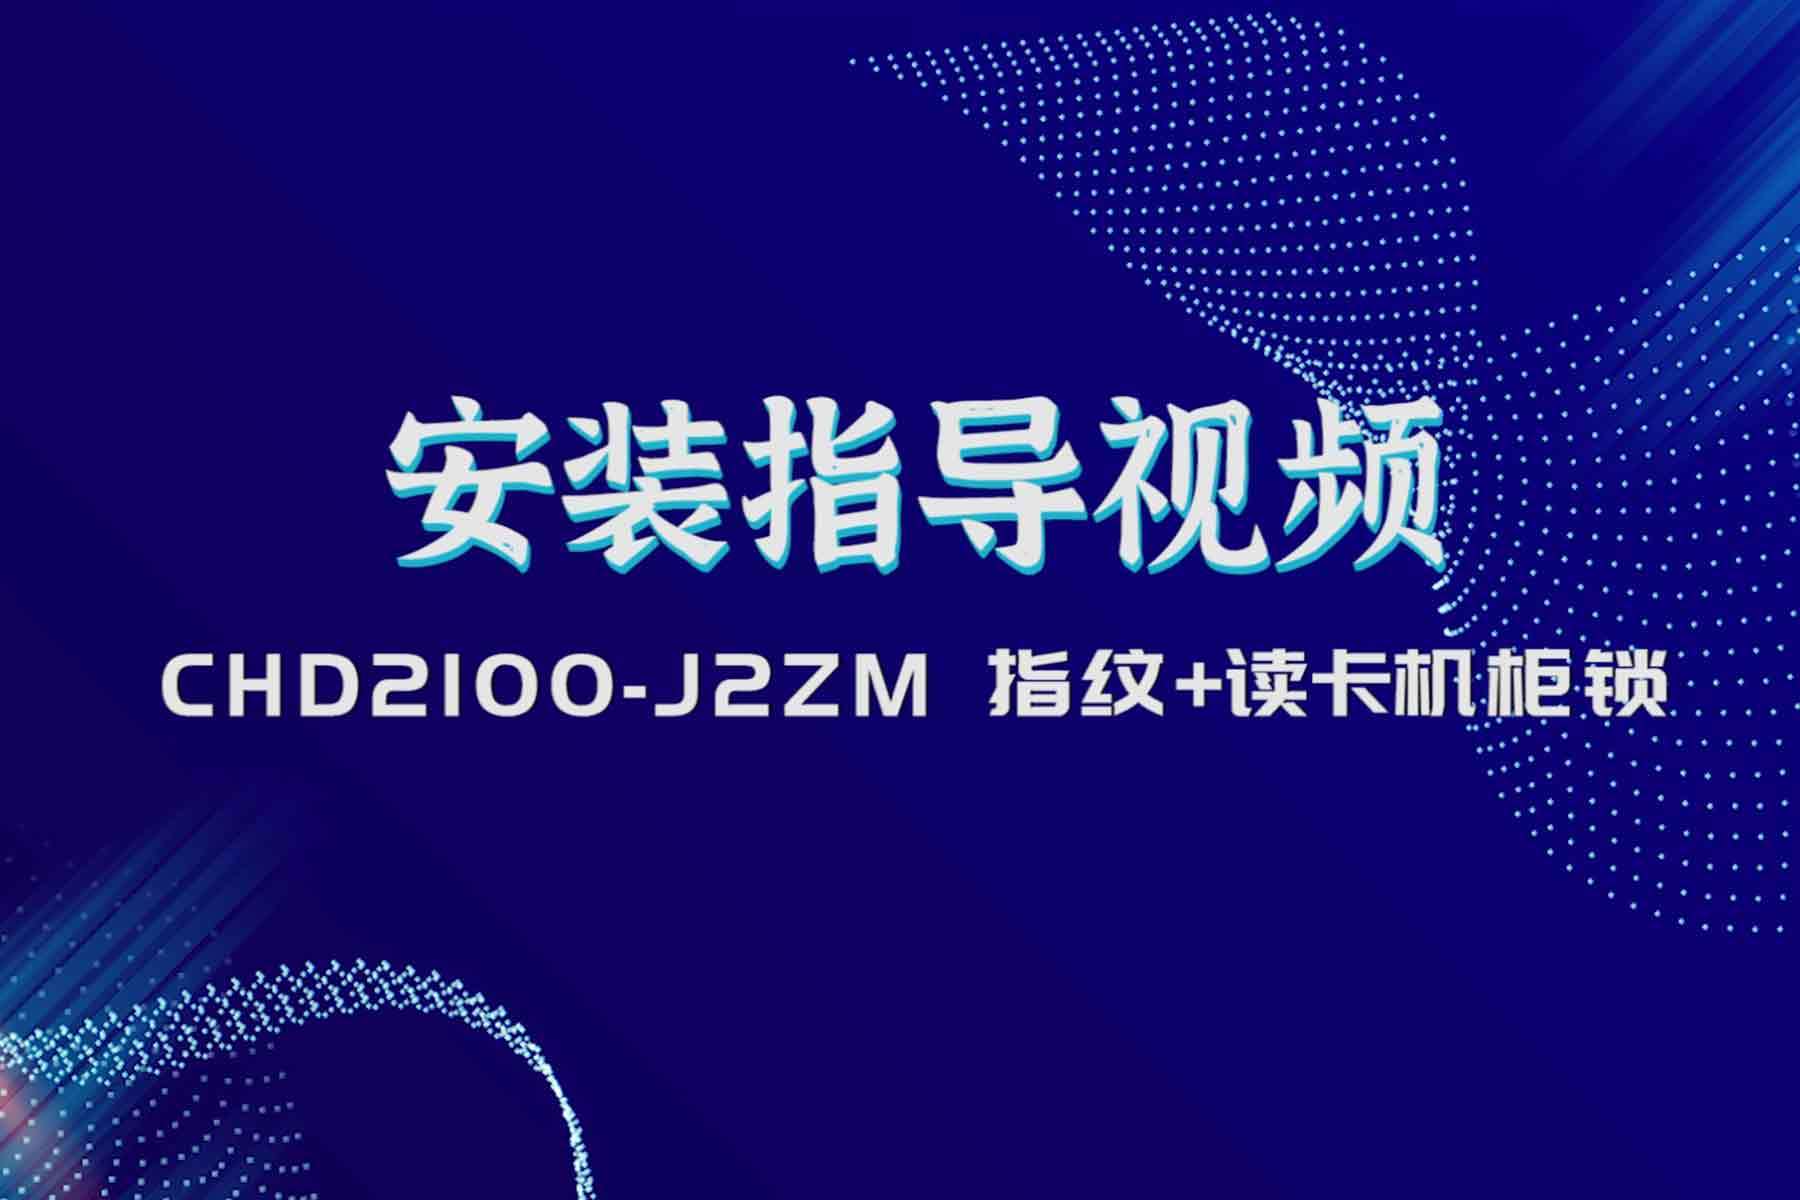 2100-J2ZM安装指导视频